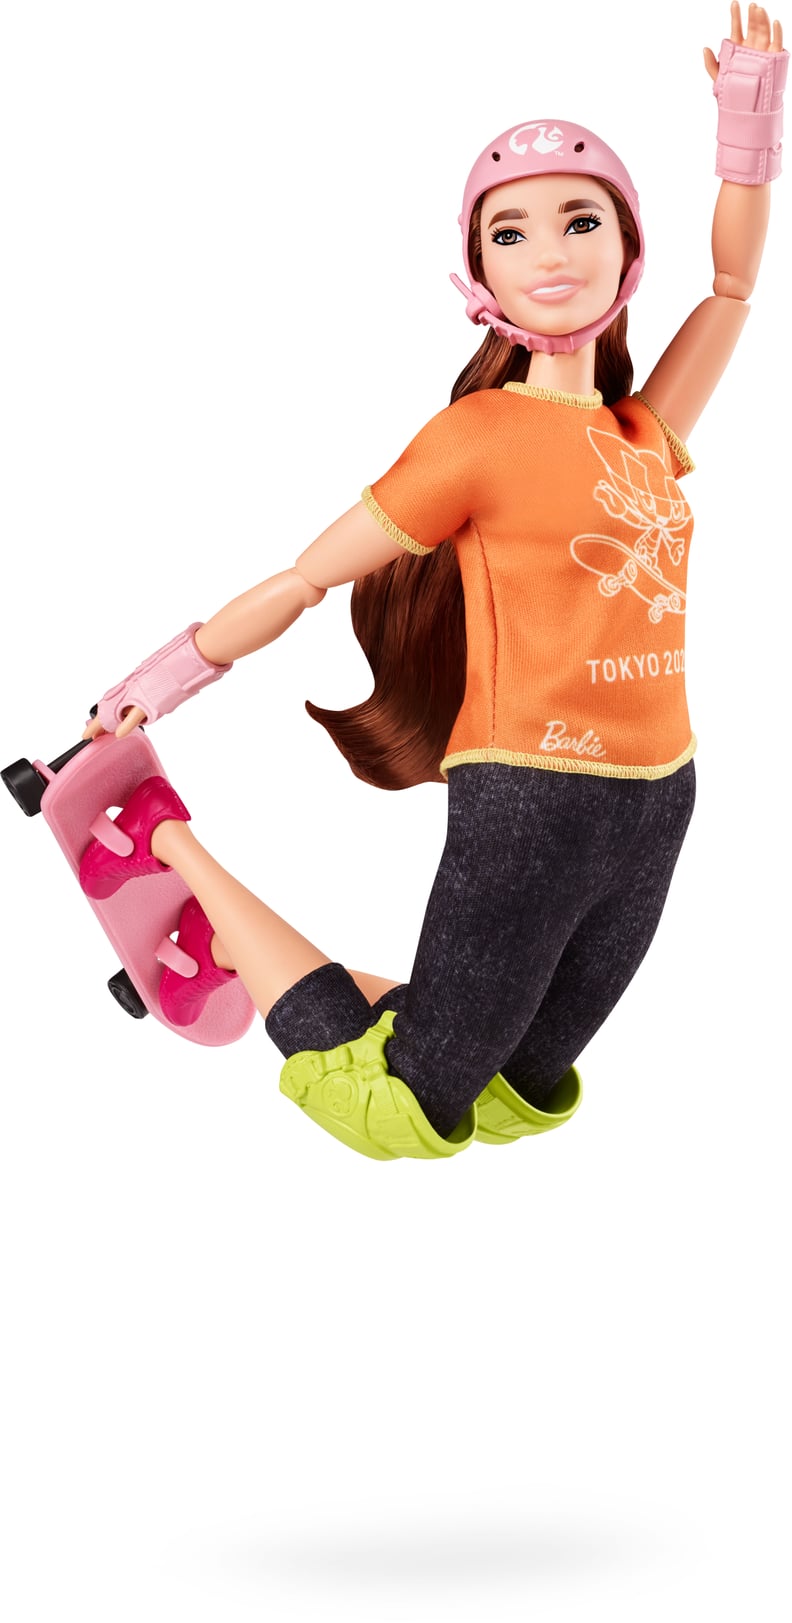 Summer Olympics 2020 Skateboarding Barbie